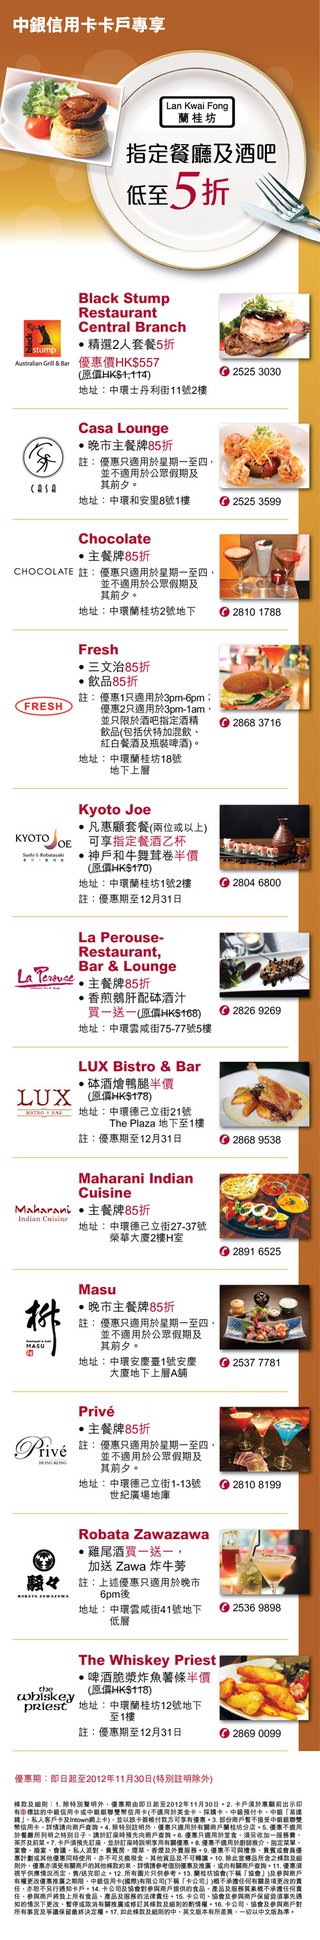 蘭桂坊指定餐廳及酒吧優惠延長 - Black Stump Restaurant Central Branch 